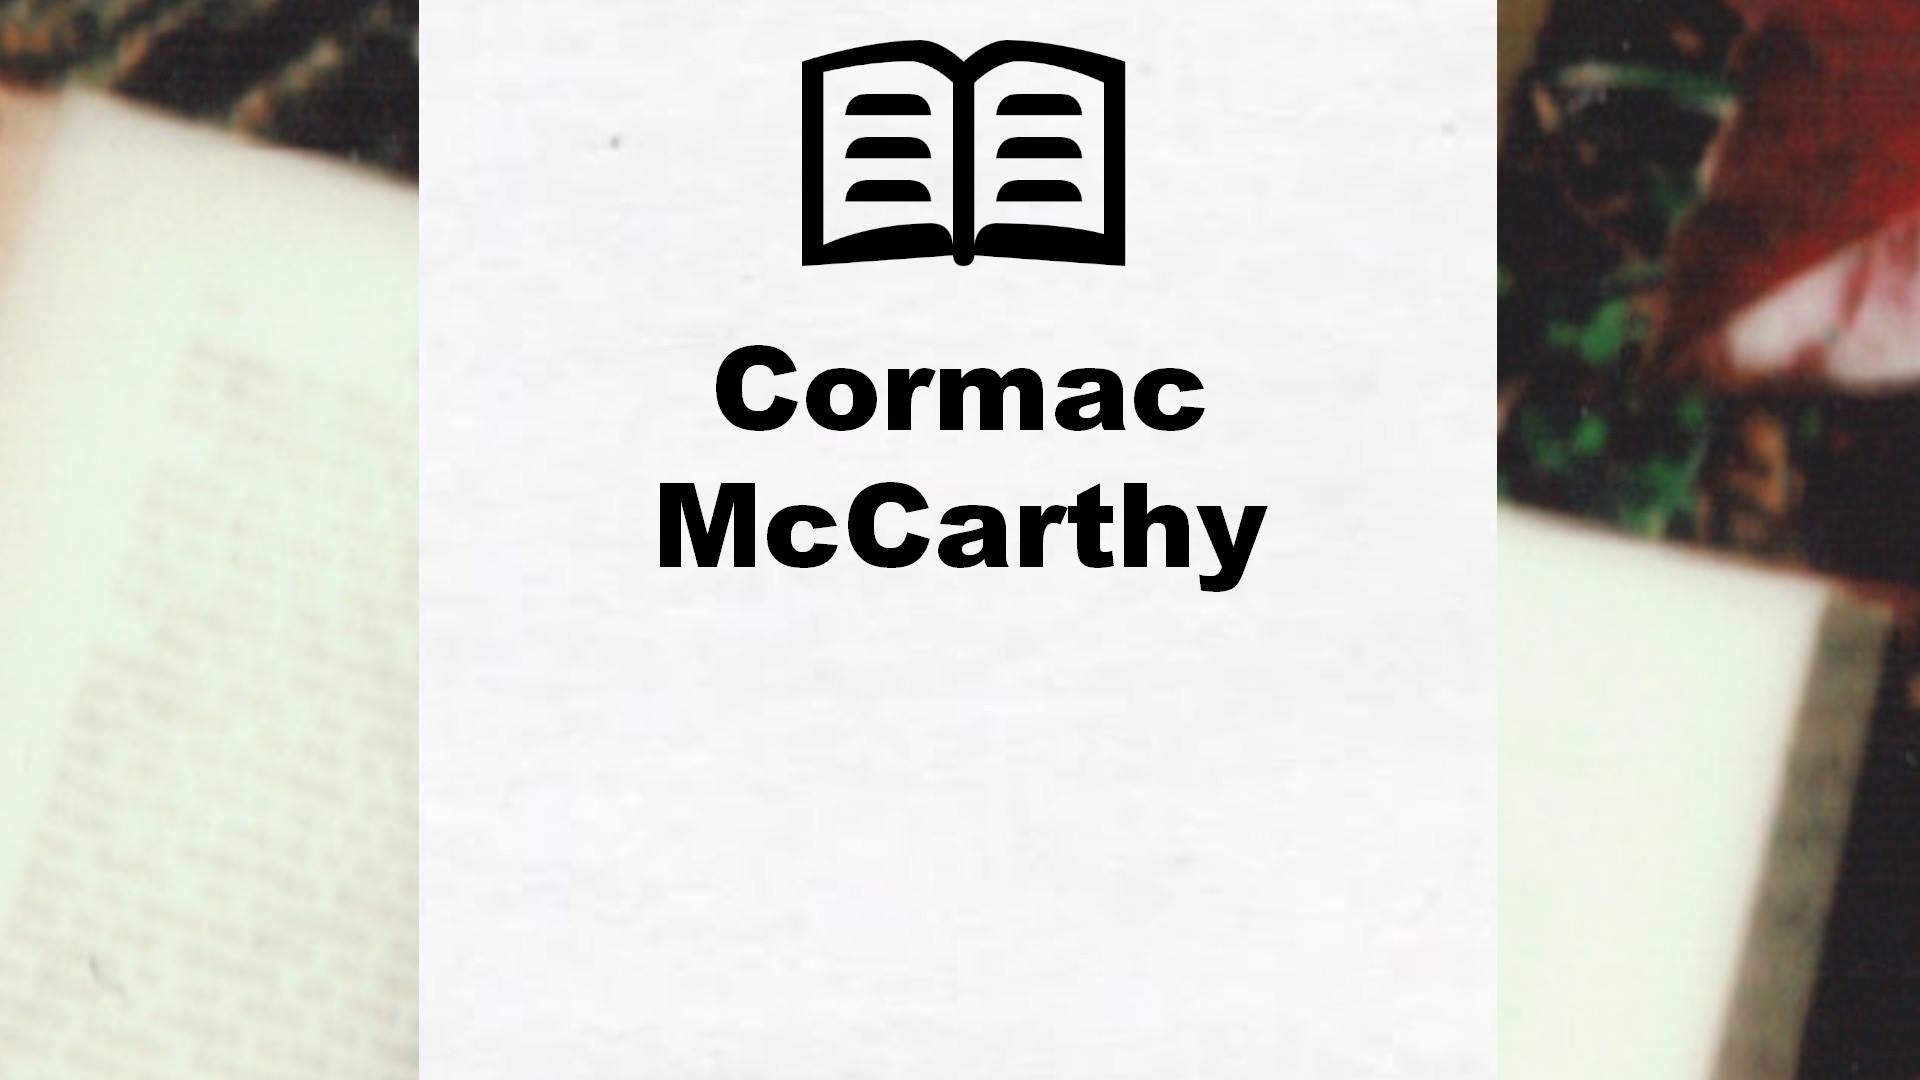 Livres de Cormac McCarthy